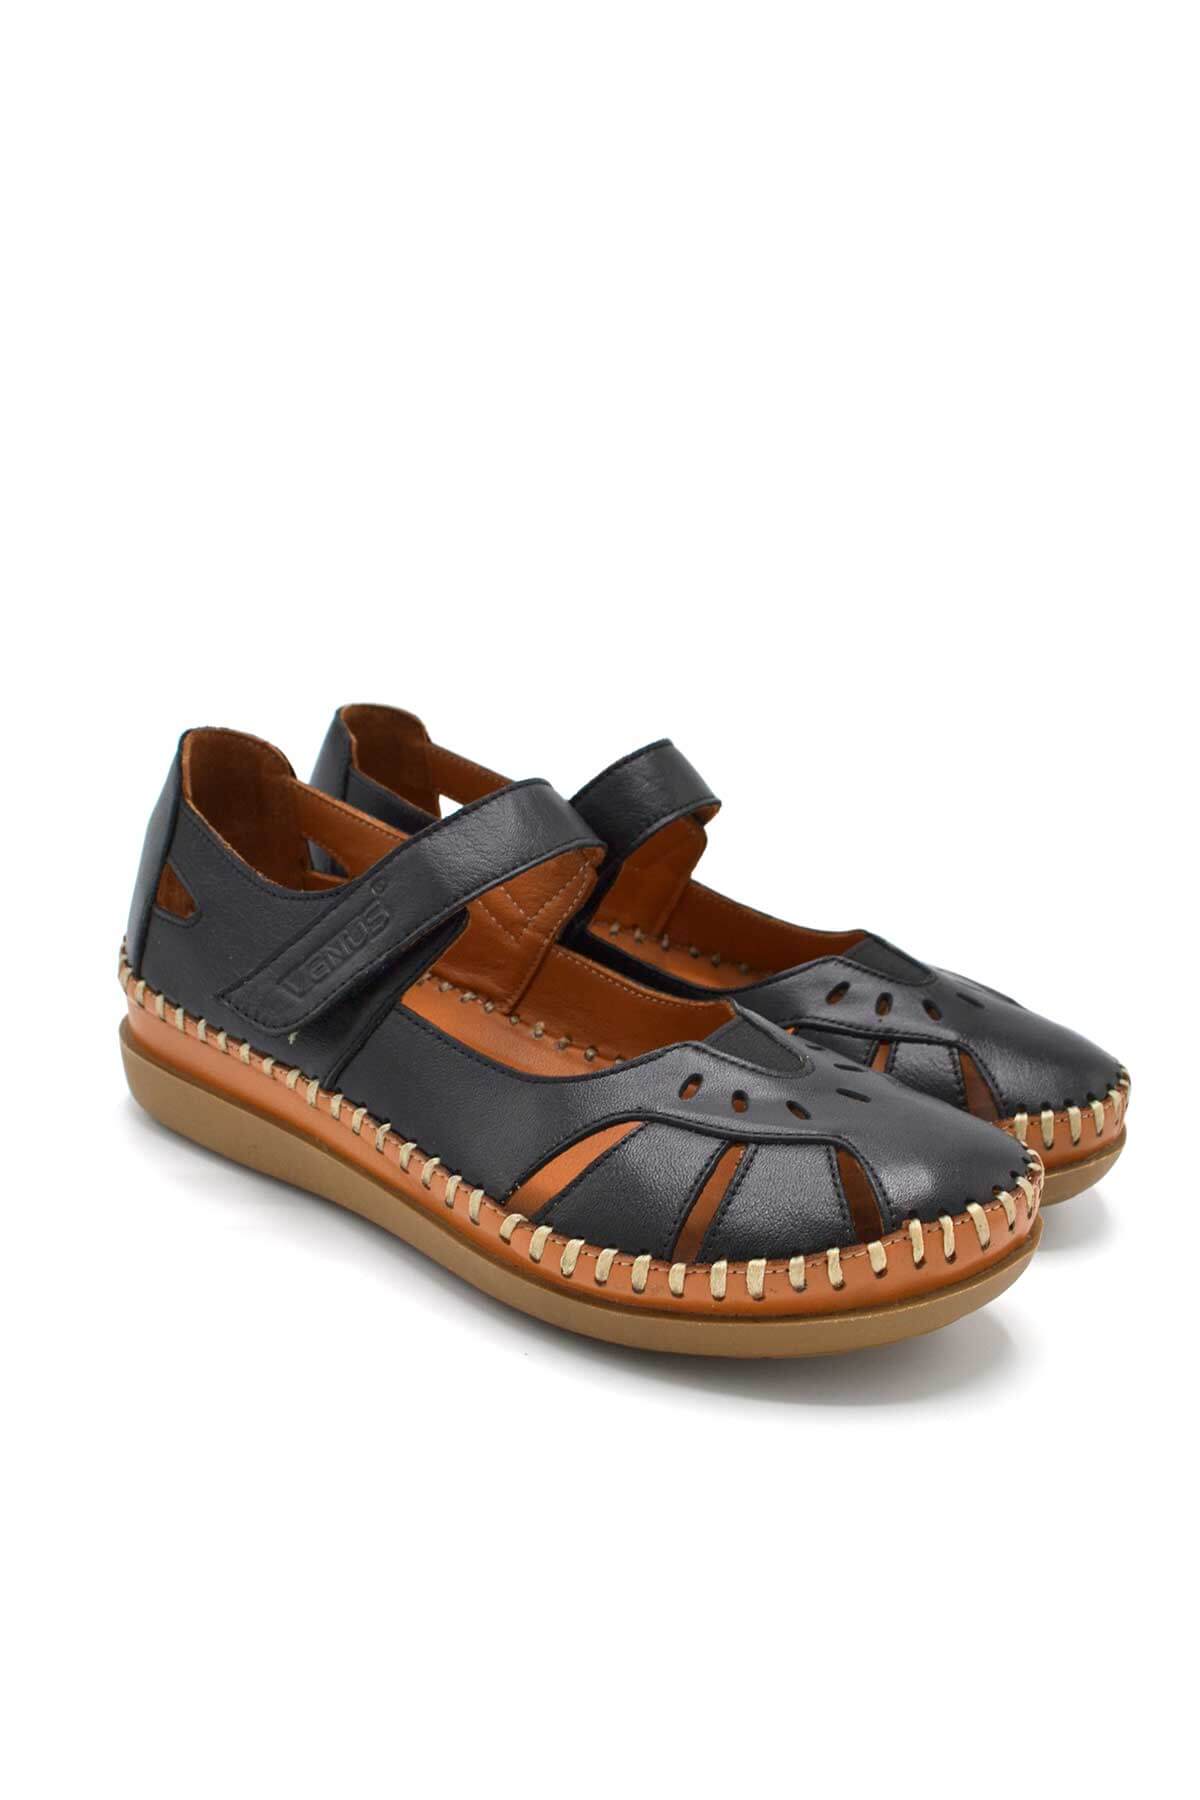 Kadın Comfort Deri Sandalet Siyah 22793524 - Thumbnail